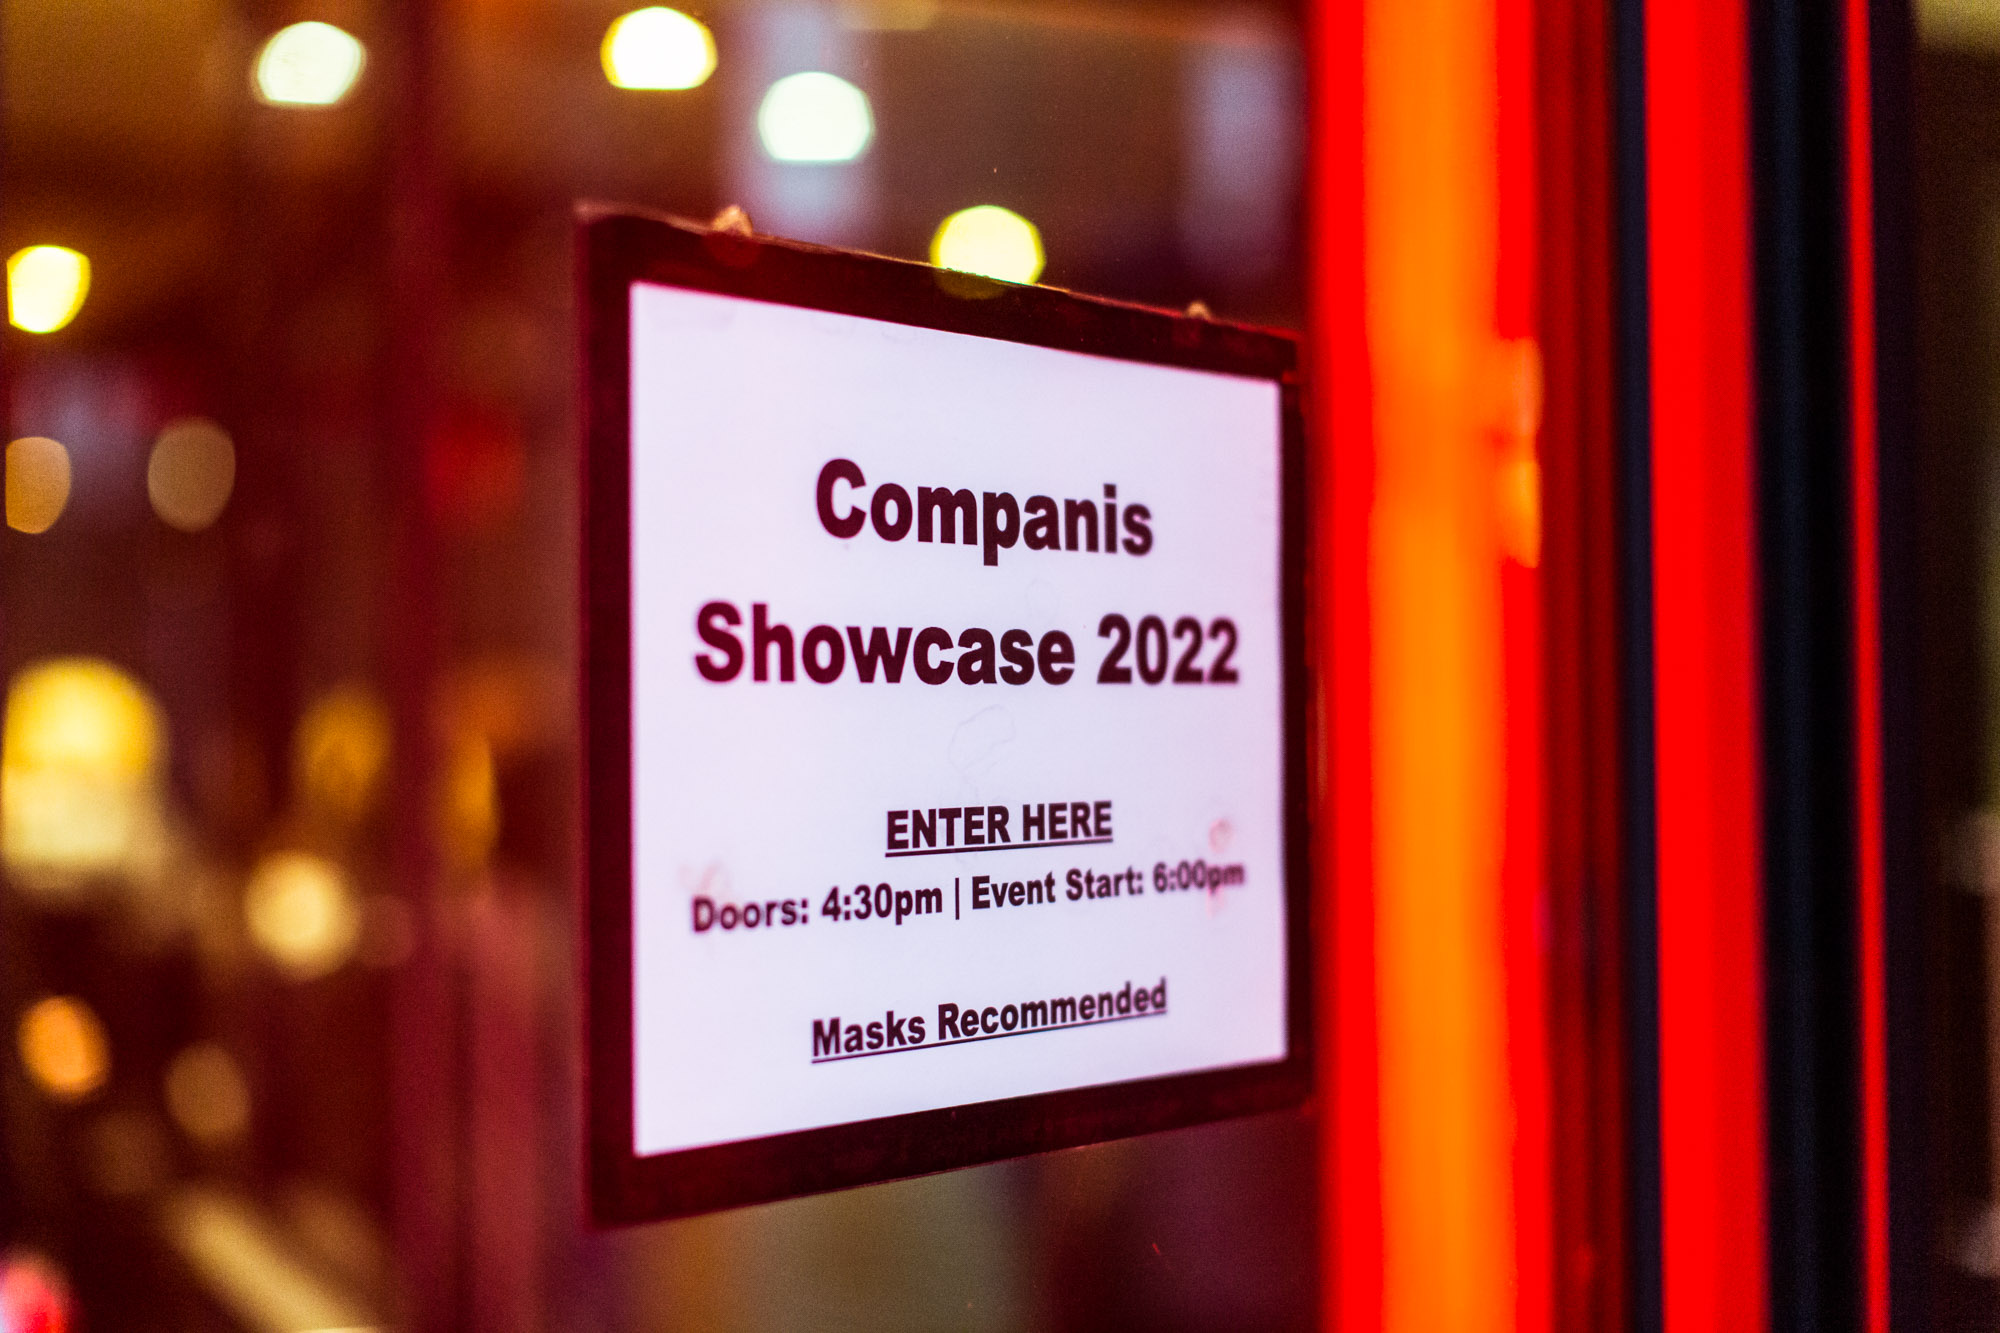 Companis Showcase 2022